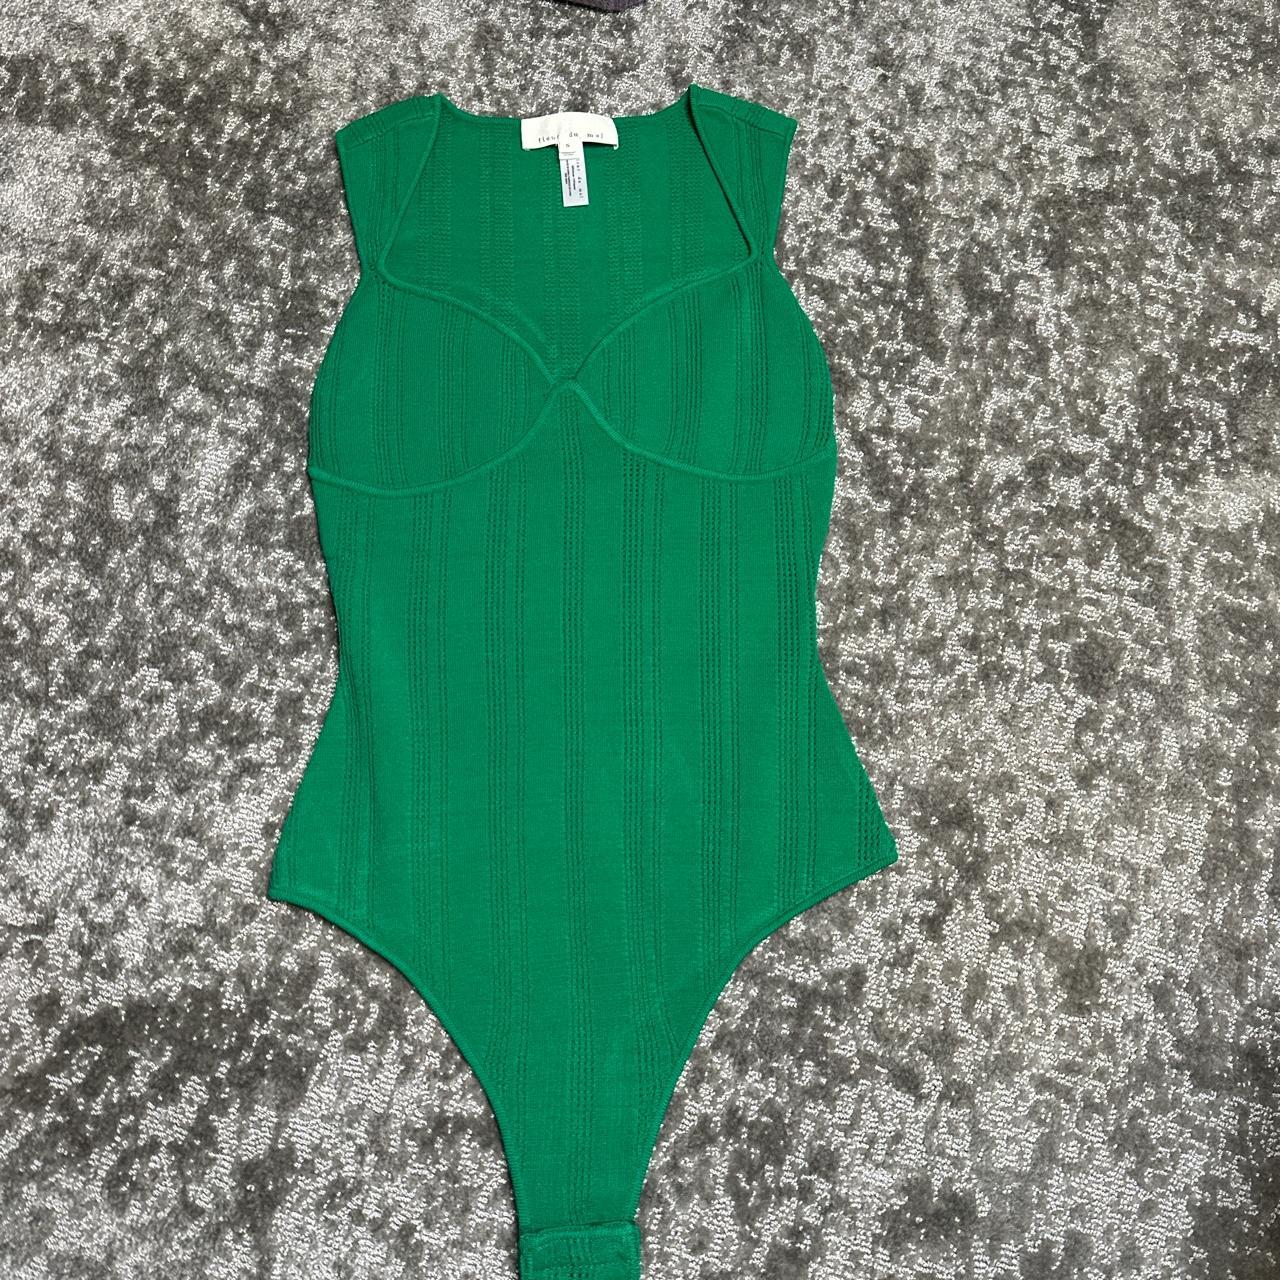 never worn fleur du mal green bodysuit - Depop